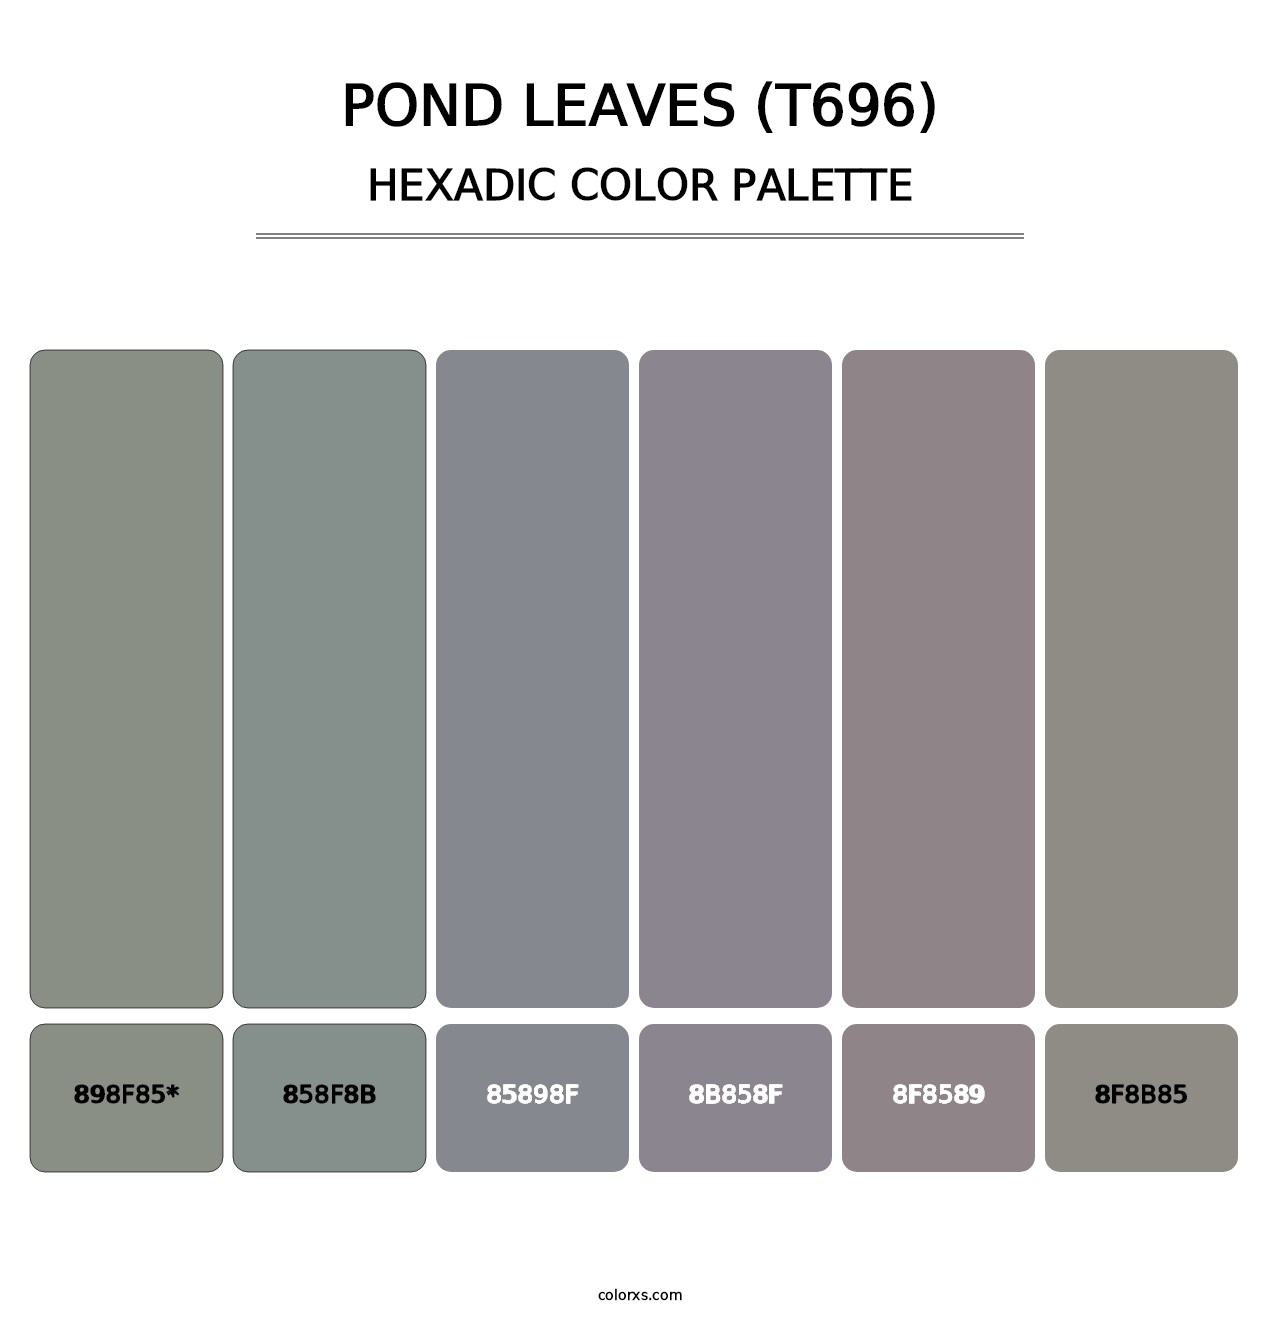 Pond Leaves (T696) - Hexadic Color Palette